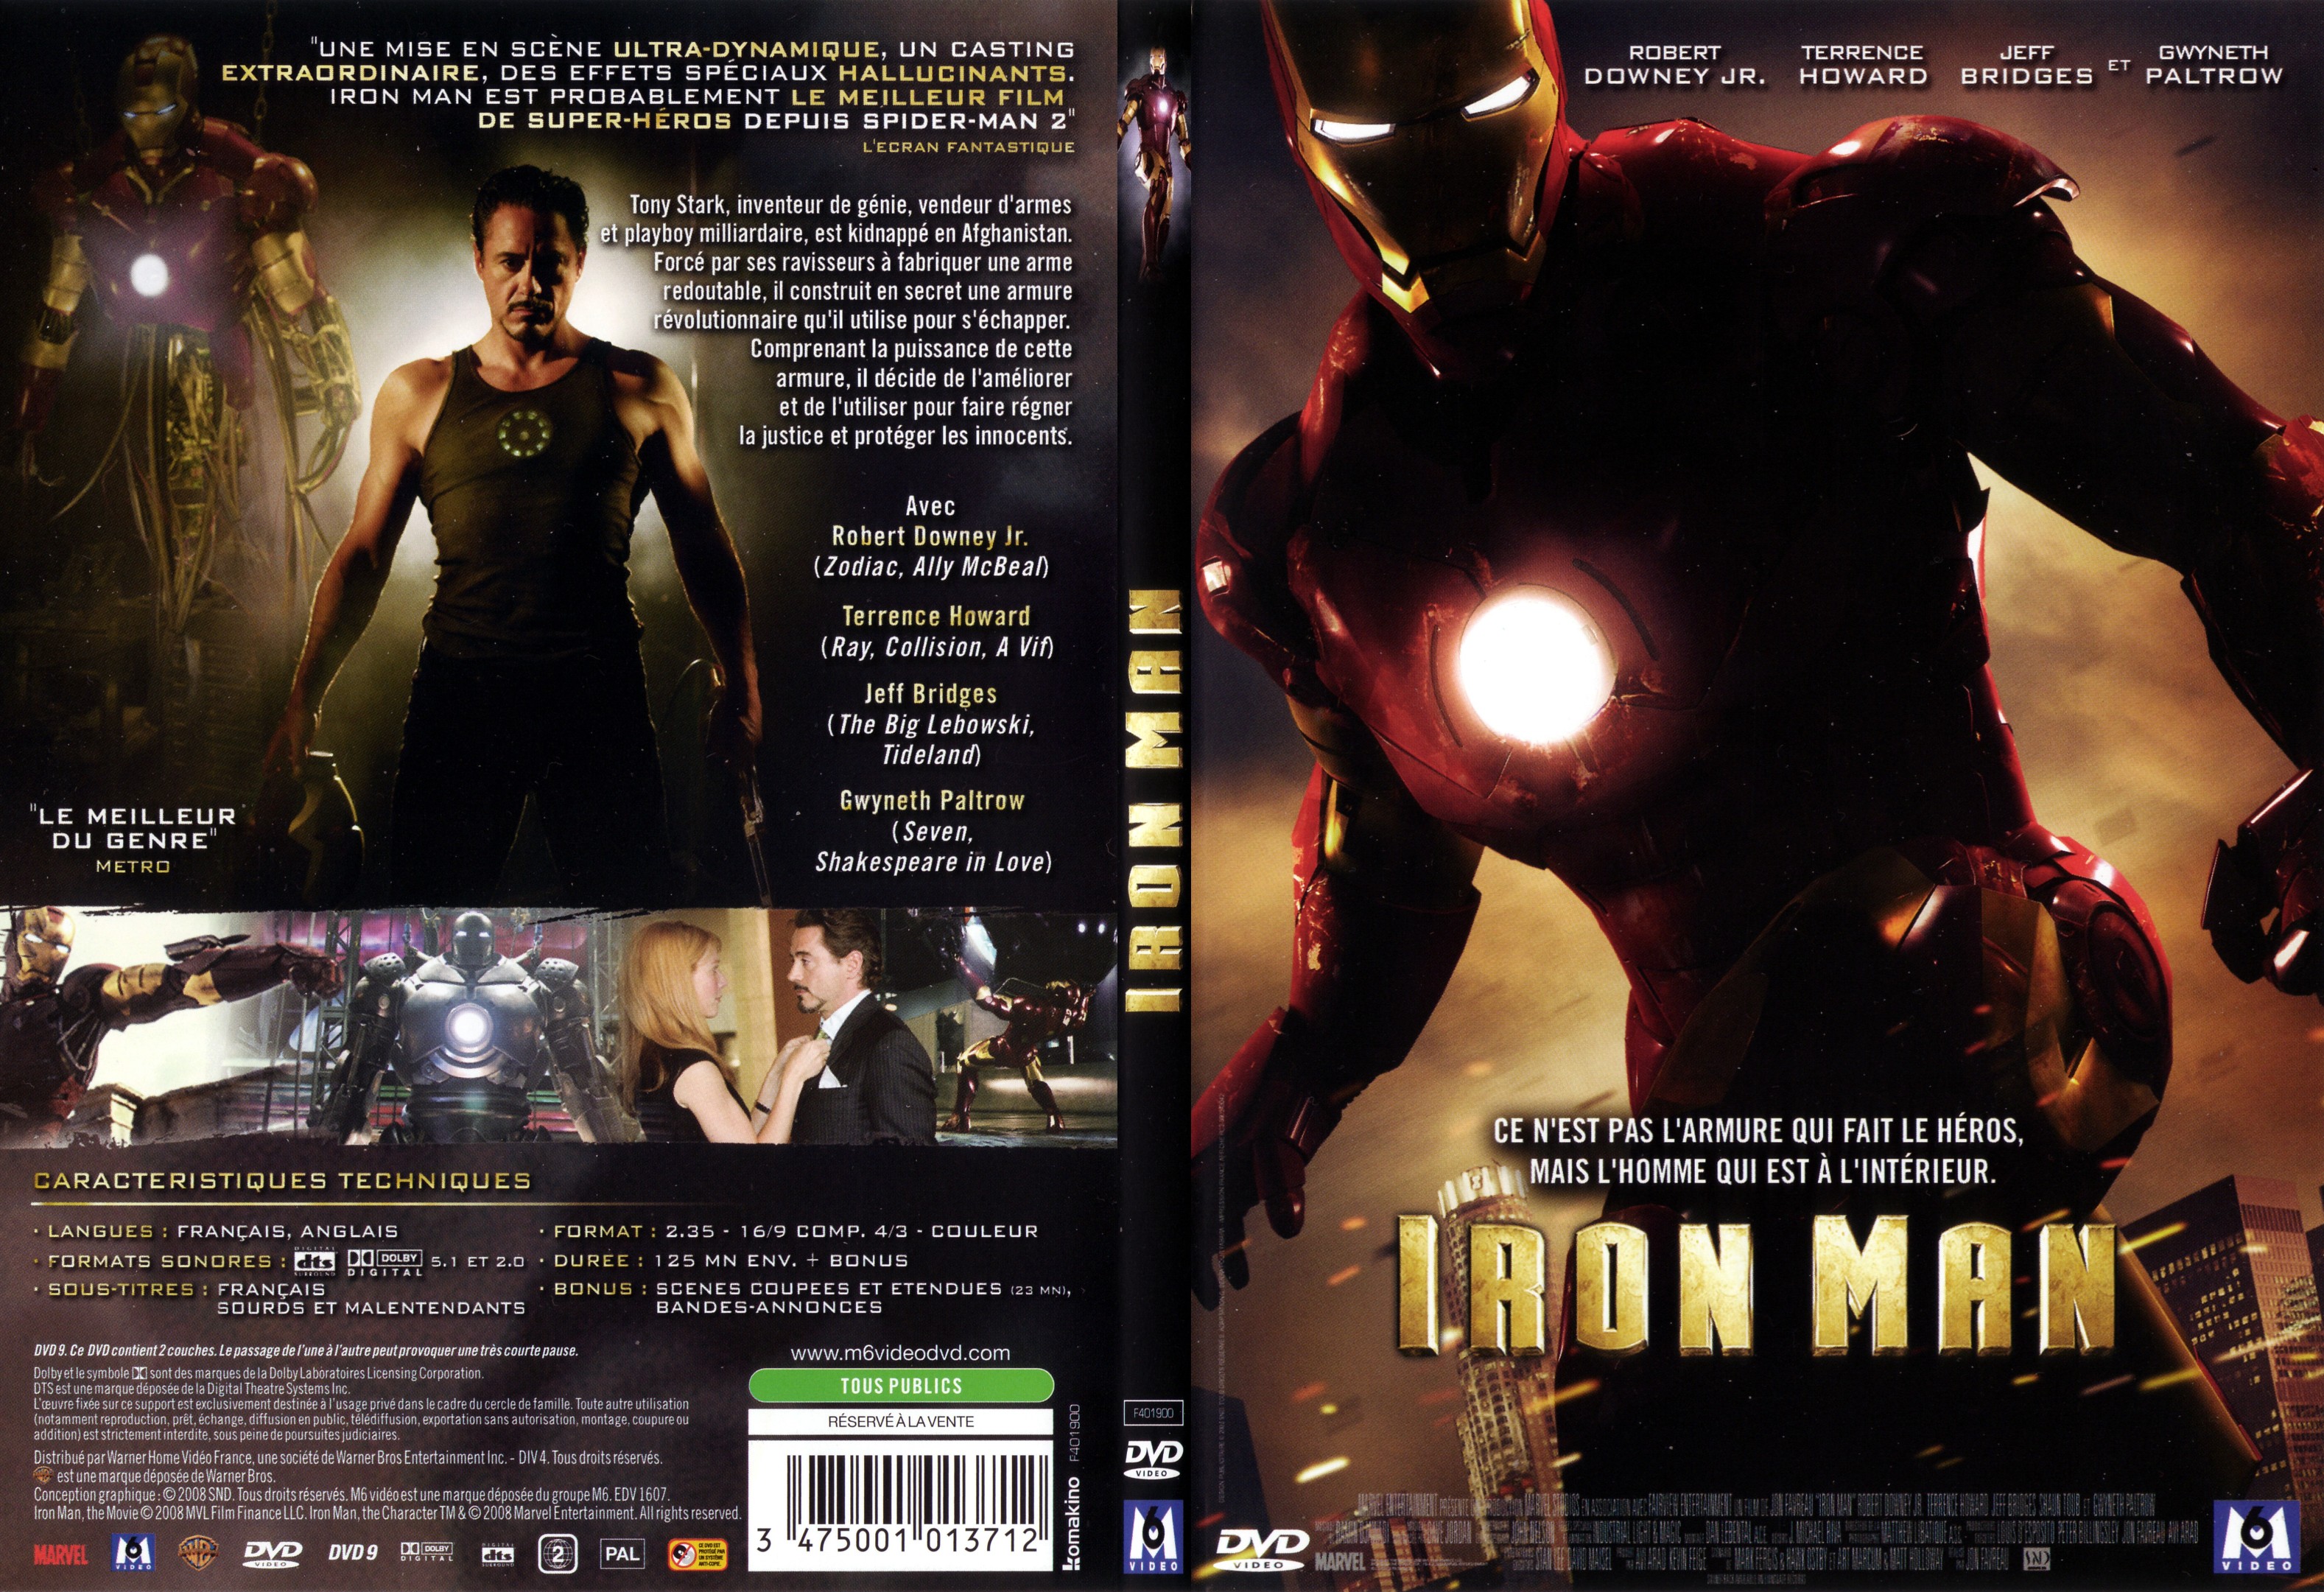 Jaquette DVD Iron man - SLIM